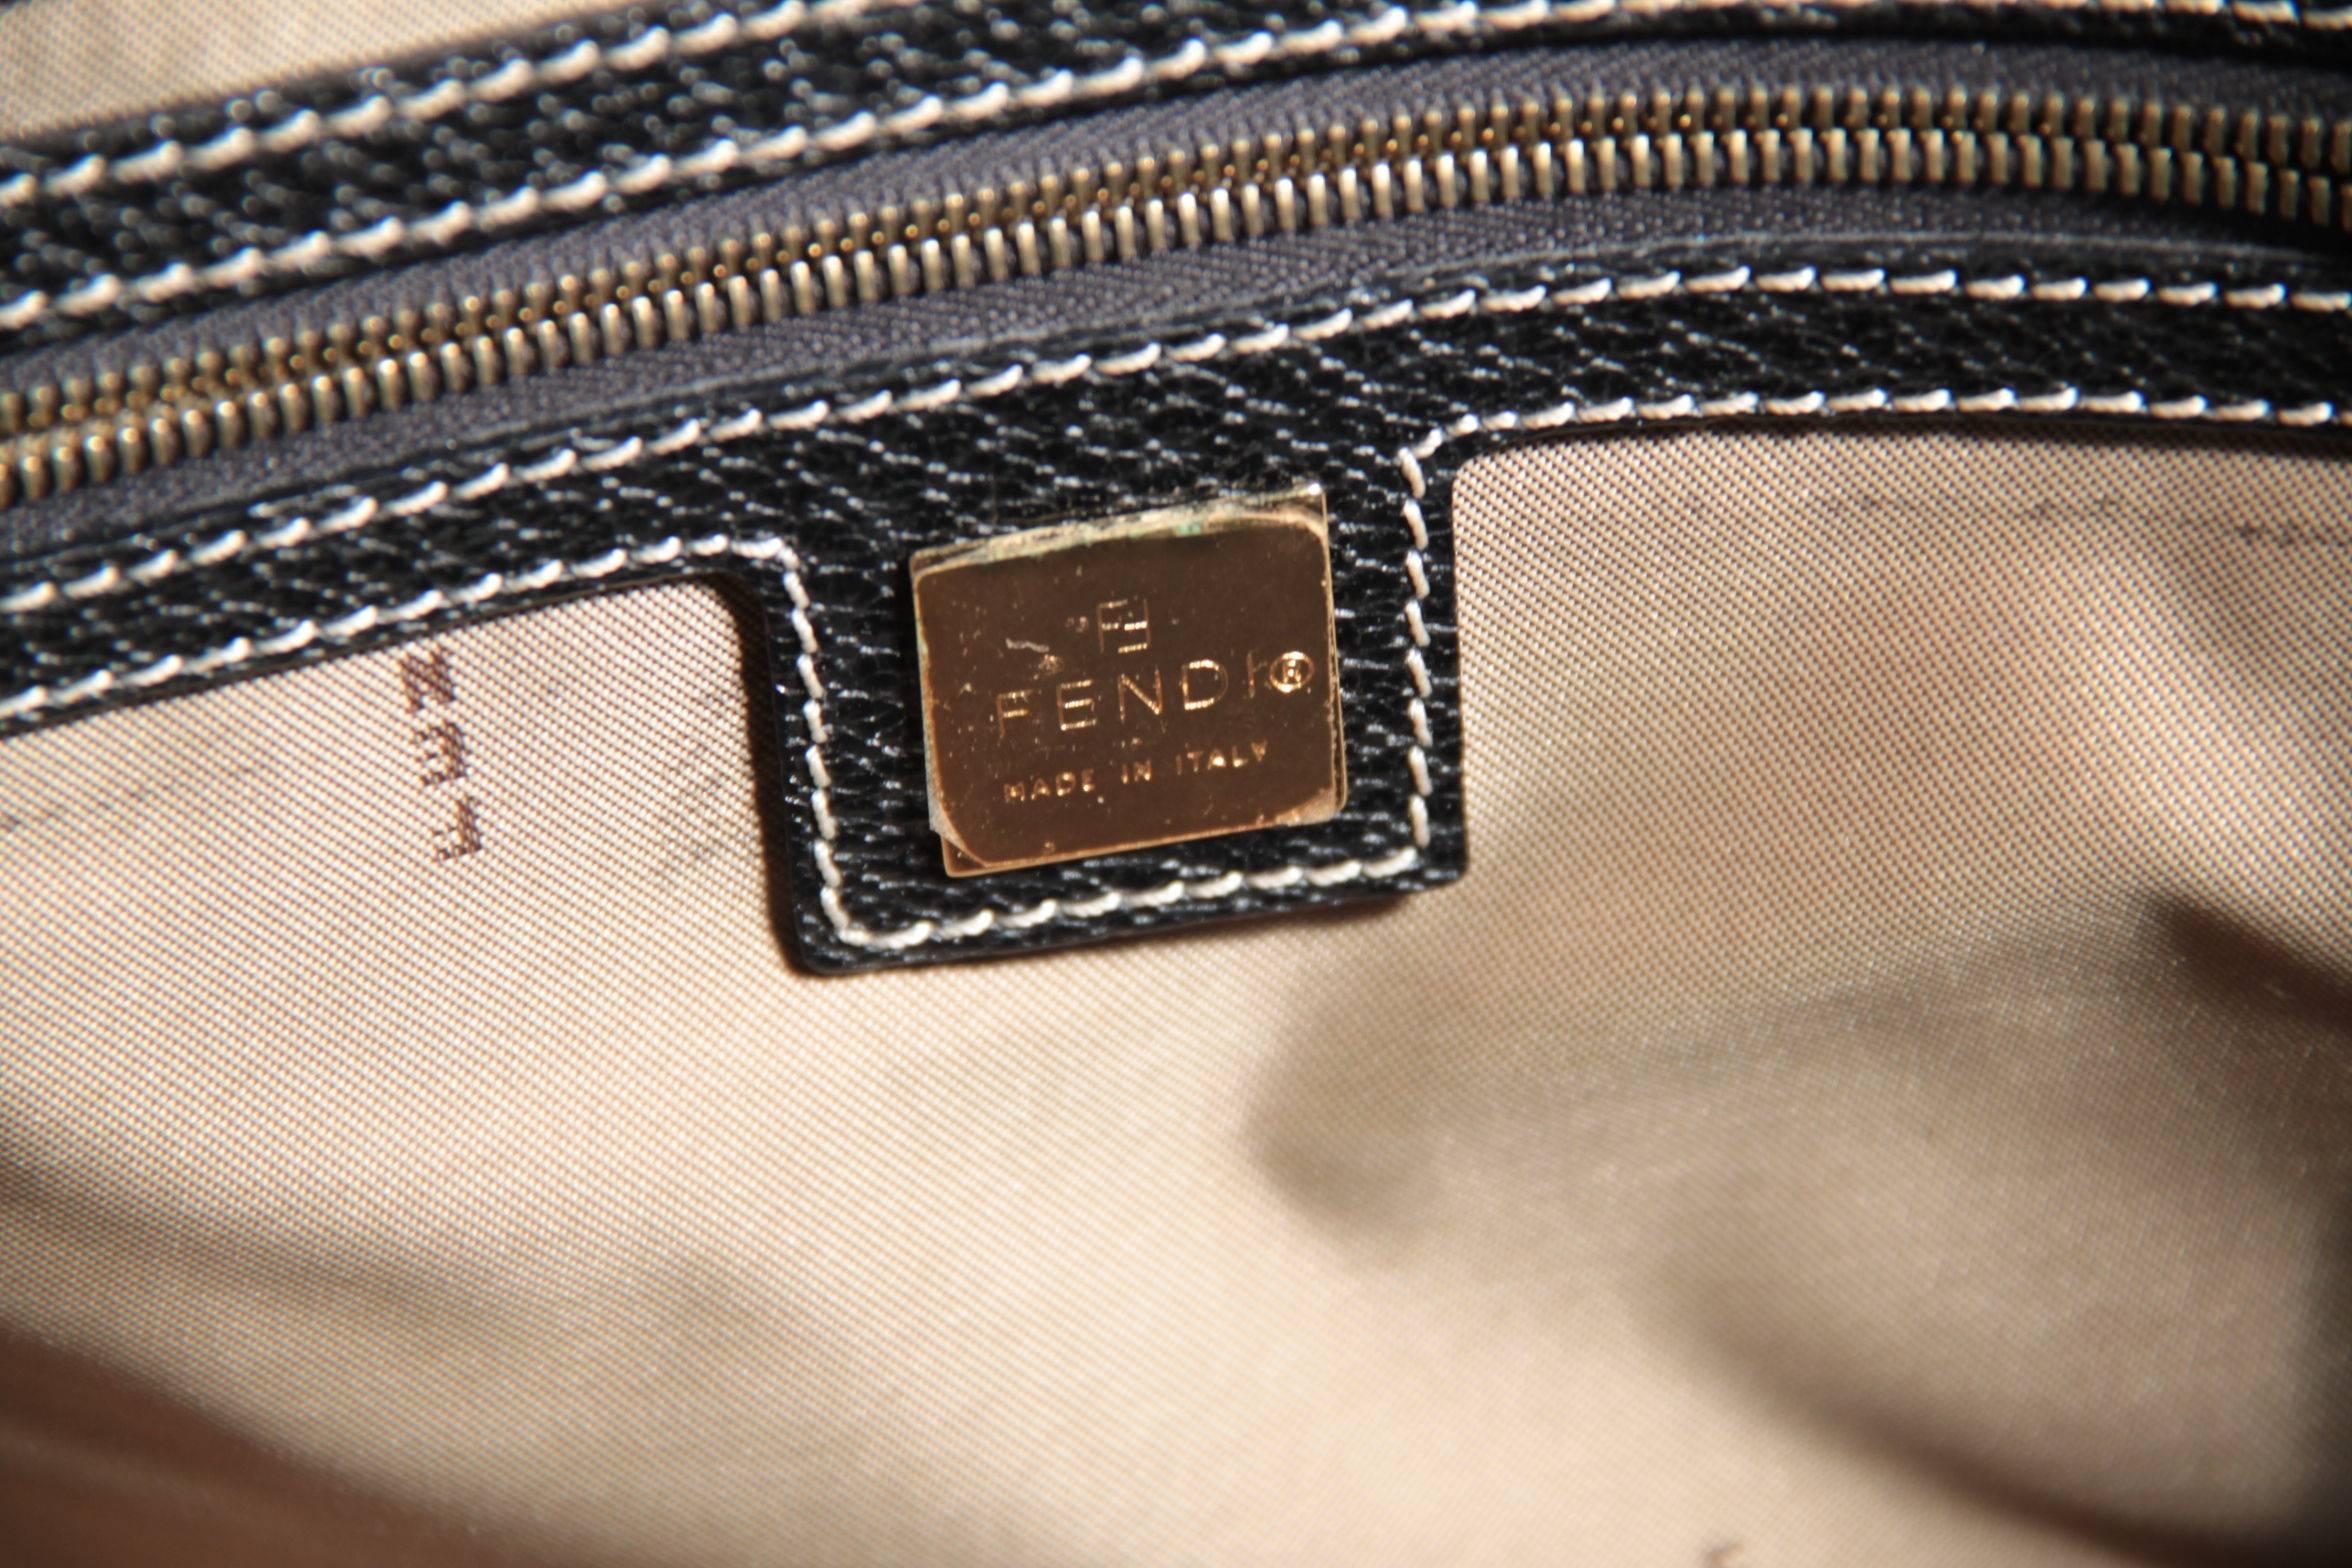 Women's FENDI Italian STRAW & Black Leather STUDDED LARGE TOTE Handbag SATCHEL